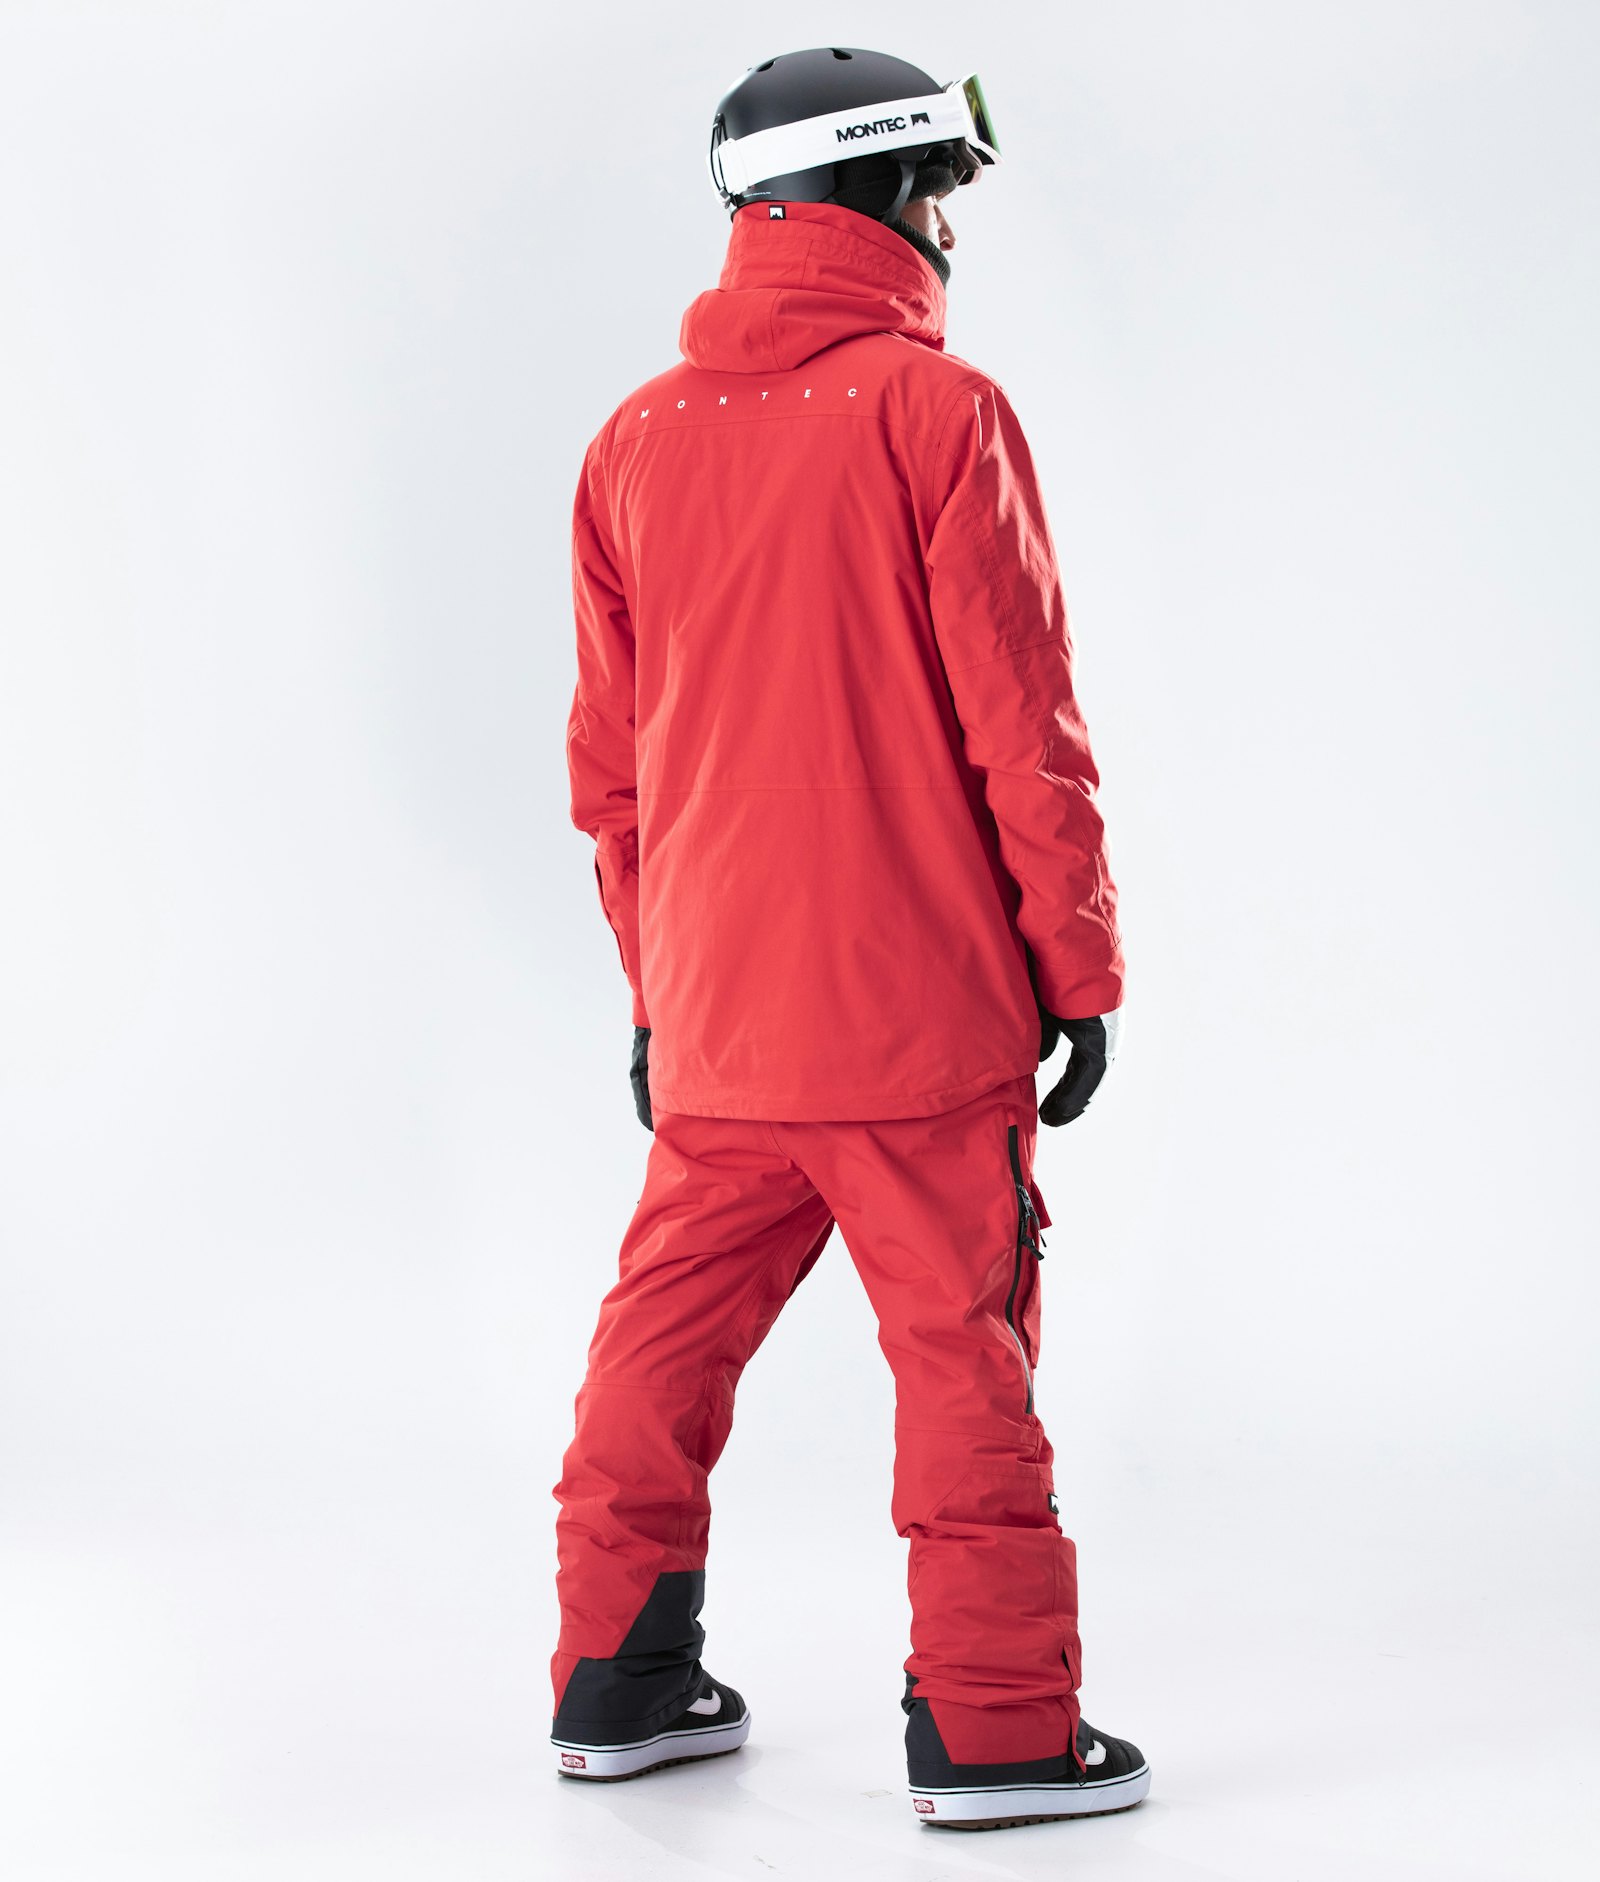 Fawk 2020 Snowboard Jacket Men Red